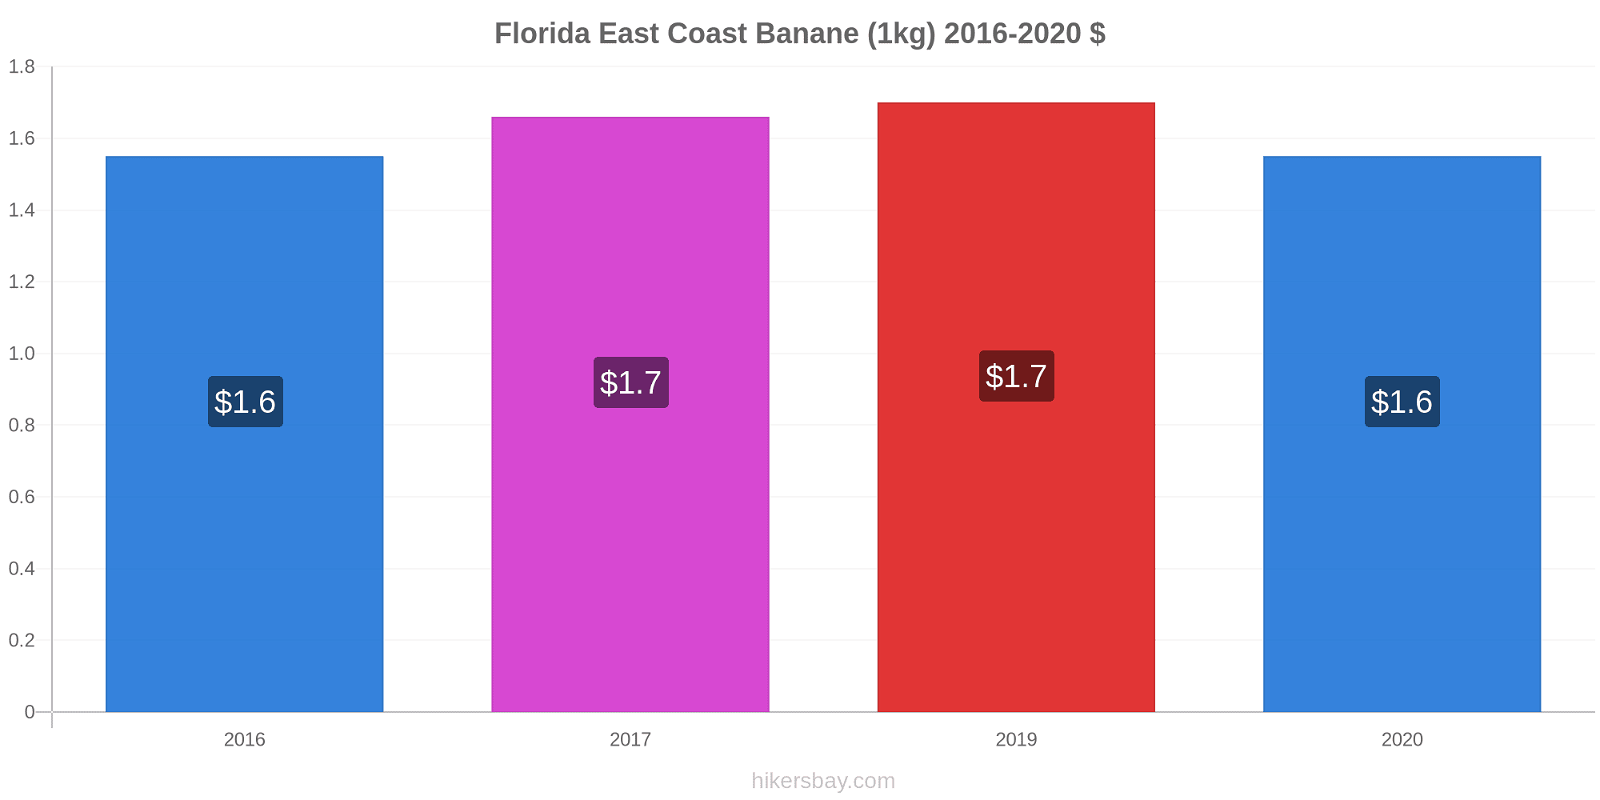 Florida East Coast variazioni di prezzo Banana (1kg) hikersbay.com